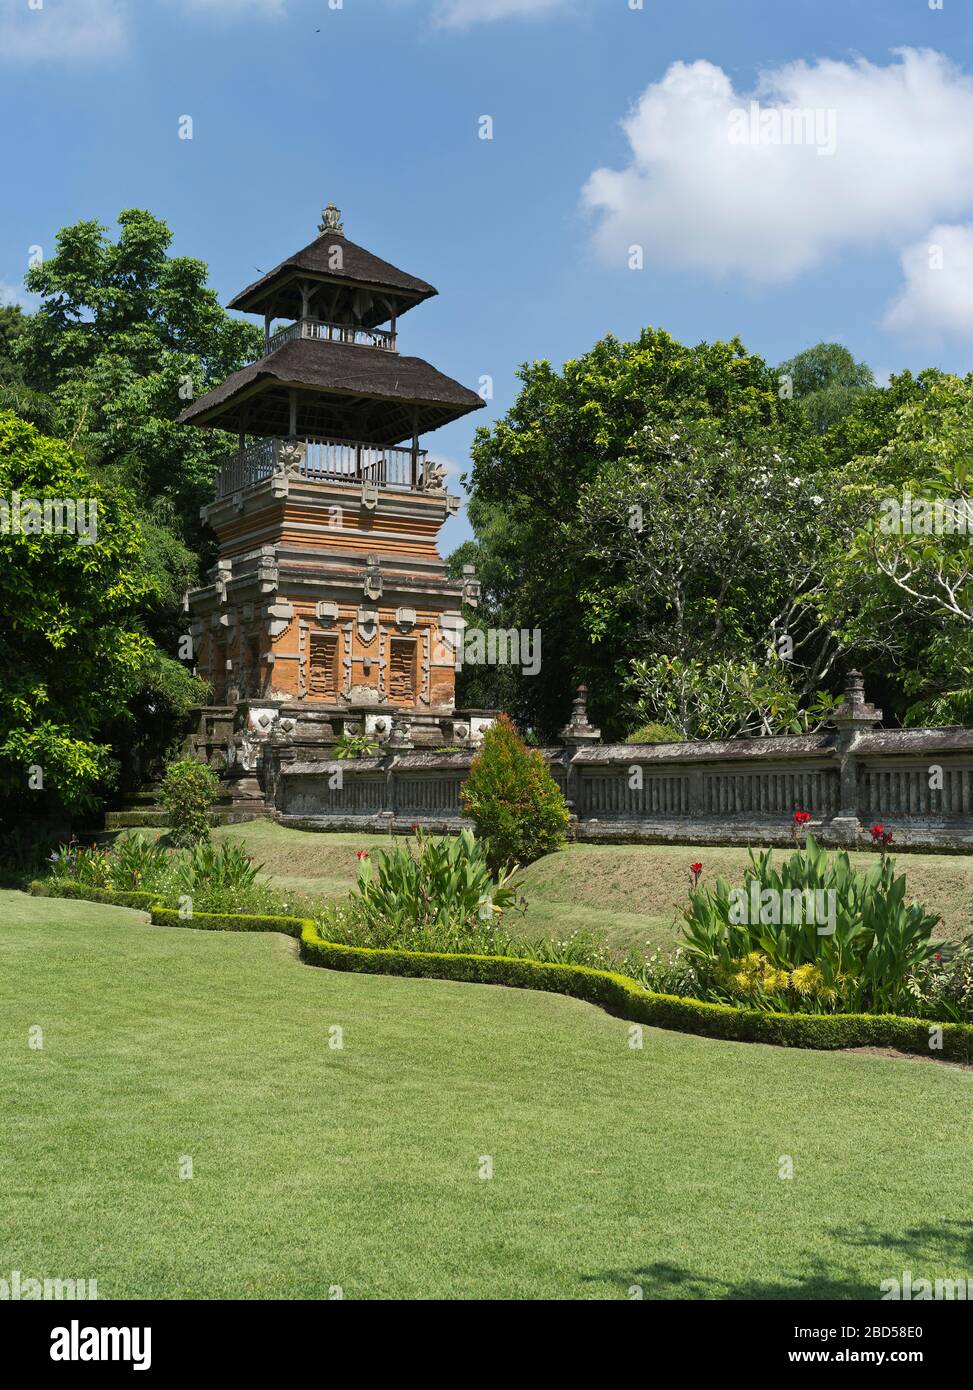 dh Pura Taman Ayun Royal Temple BALI INDONESIEN Balinesische Hindu Mengwi Tempel Garten Mauer Turm Architektur Stockfoto